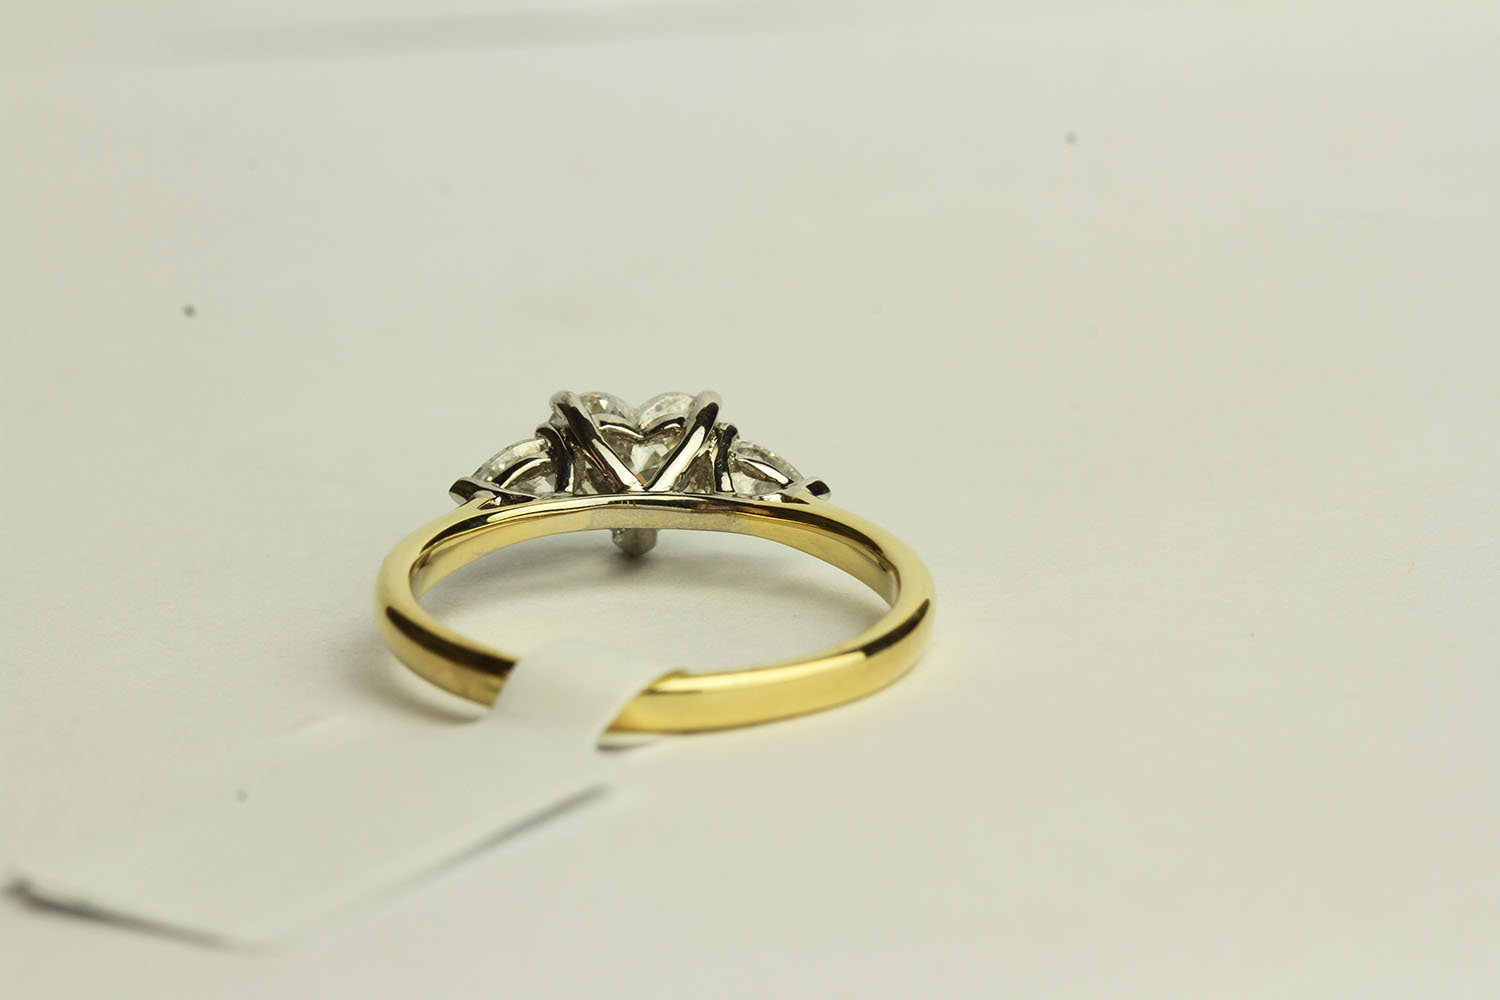 Heart Shaped Diamond Ring, set with 1 heart shaped diamond, 2 pear shaped diamonds - Image 3 of 3